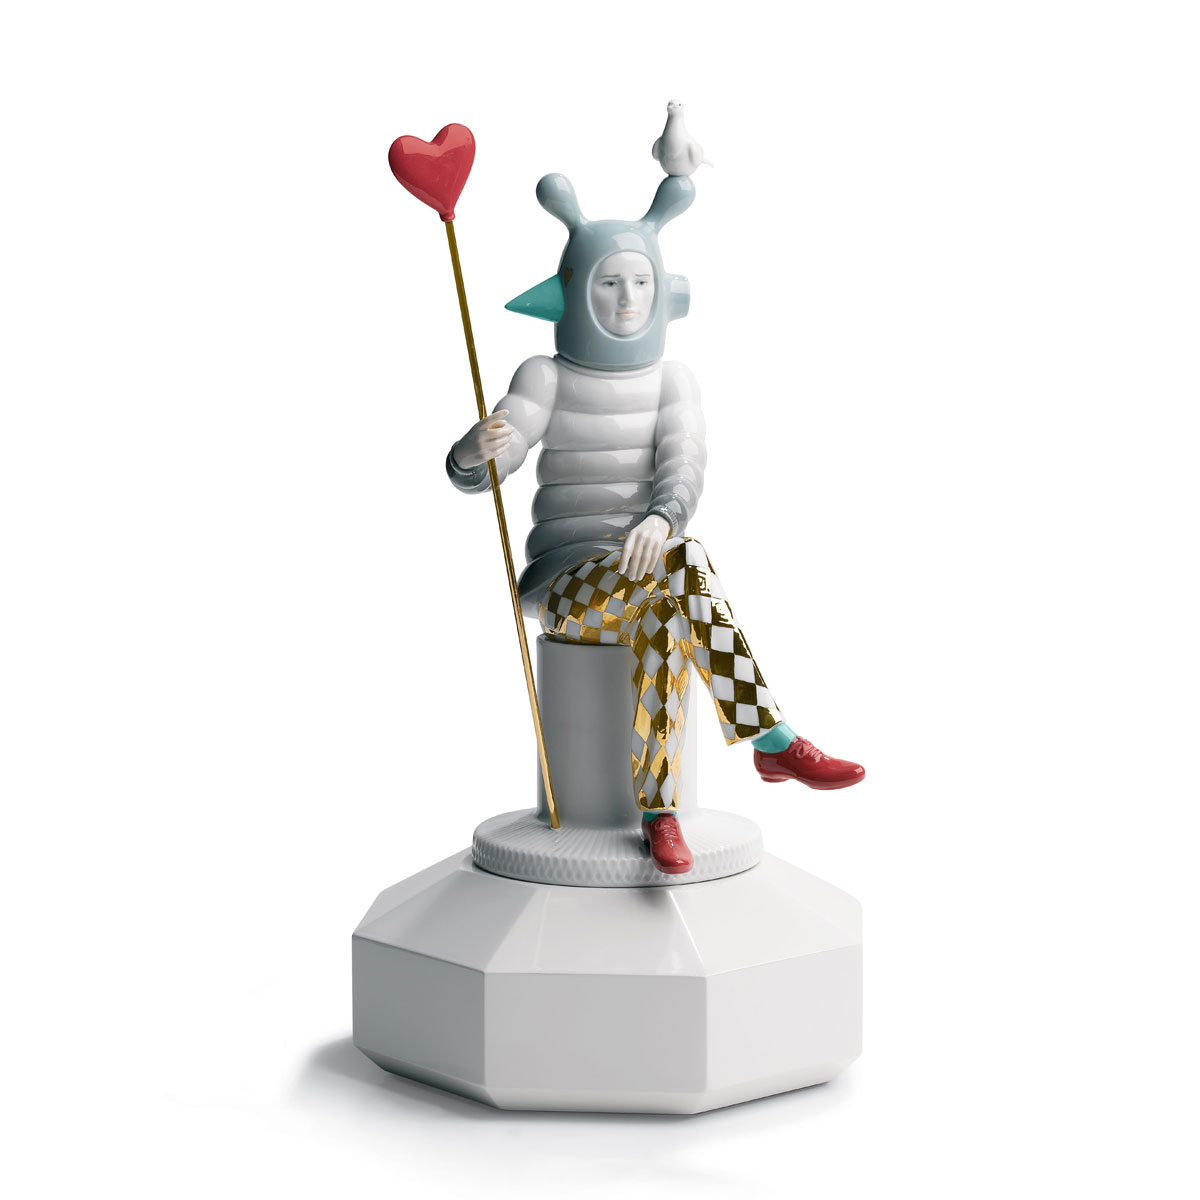 Lladro Design Figures, The Lover II Figurine. By Jaime Hayon